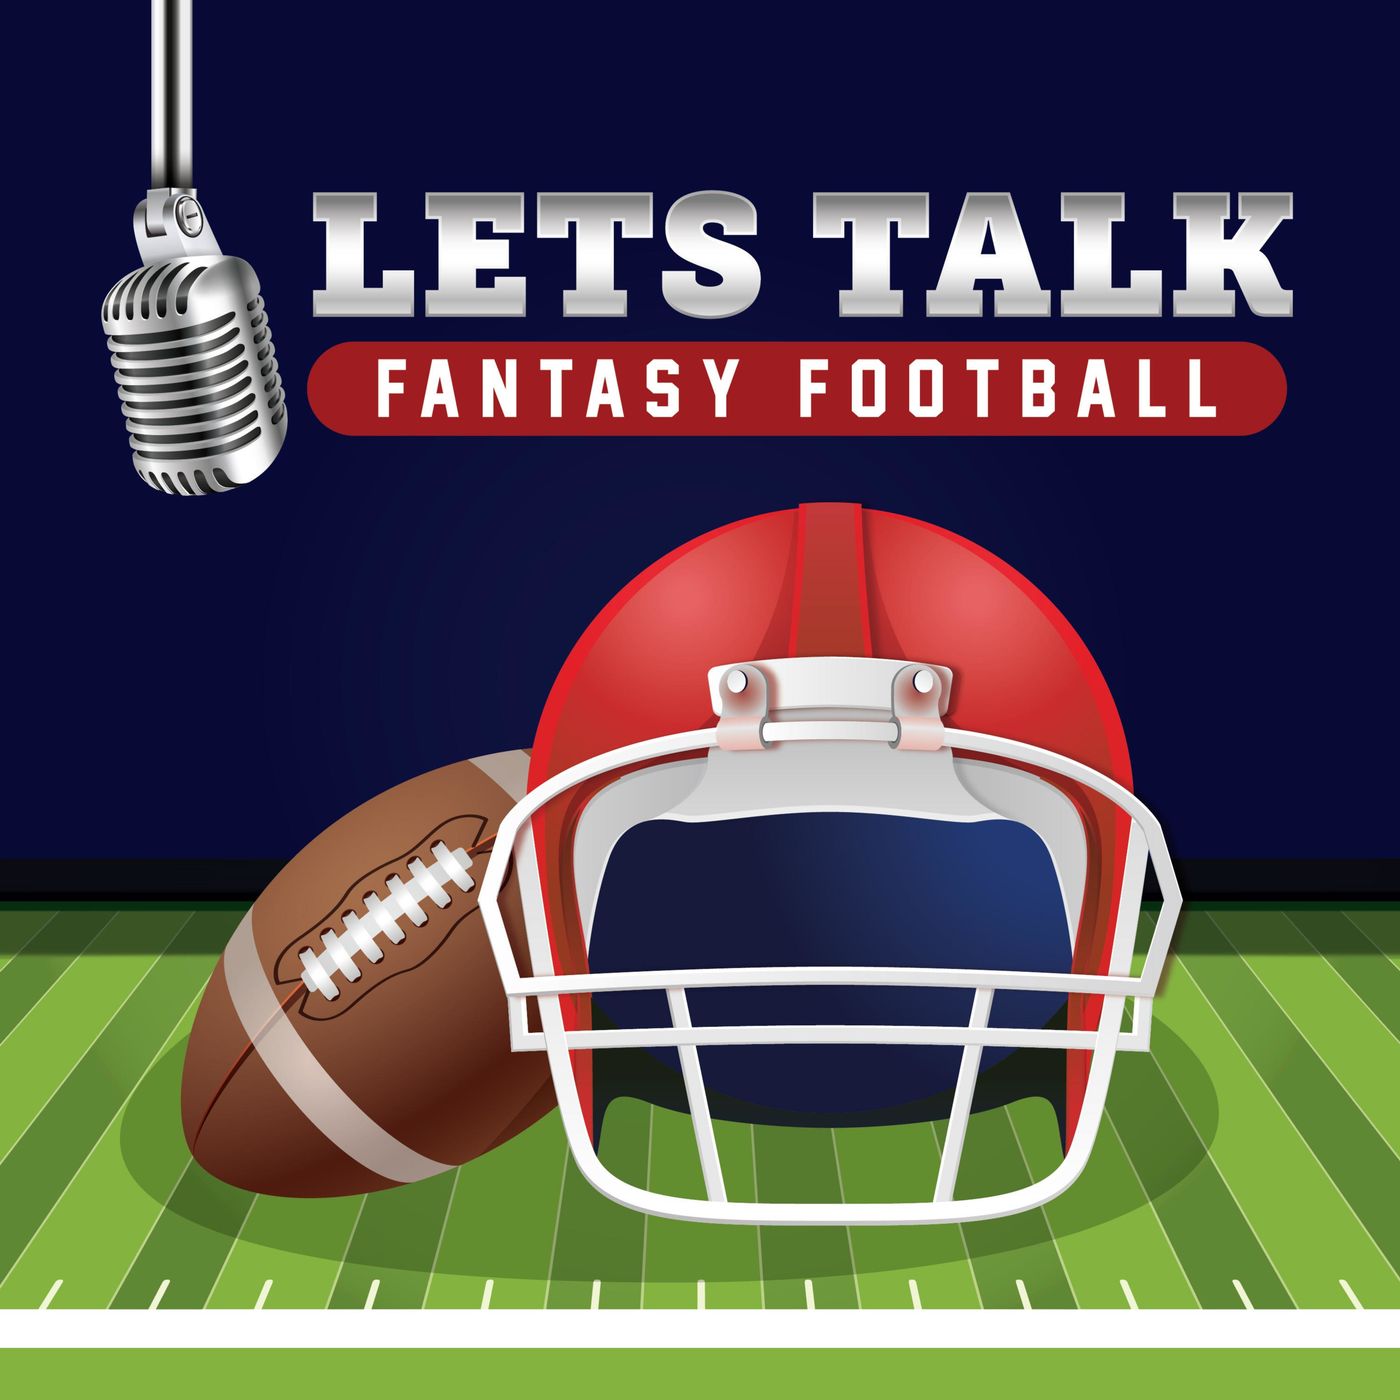 Thursday Night Football & Week 2 Preview Part 1 - Episode 320